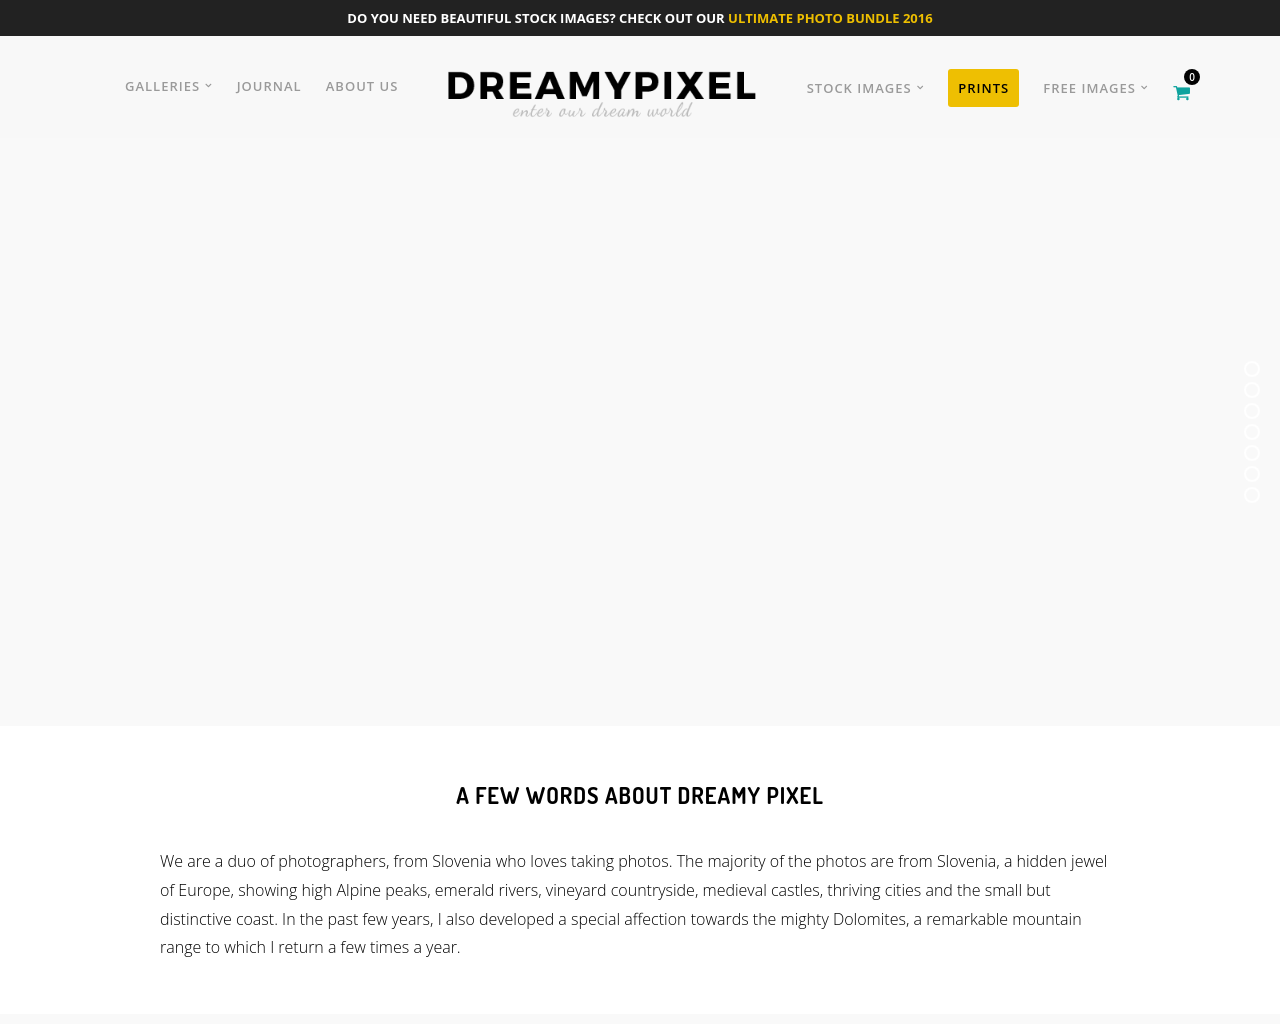 dreamypixel.com